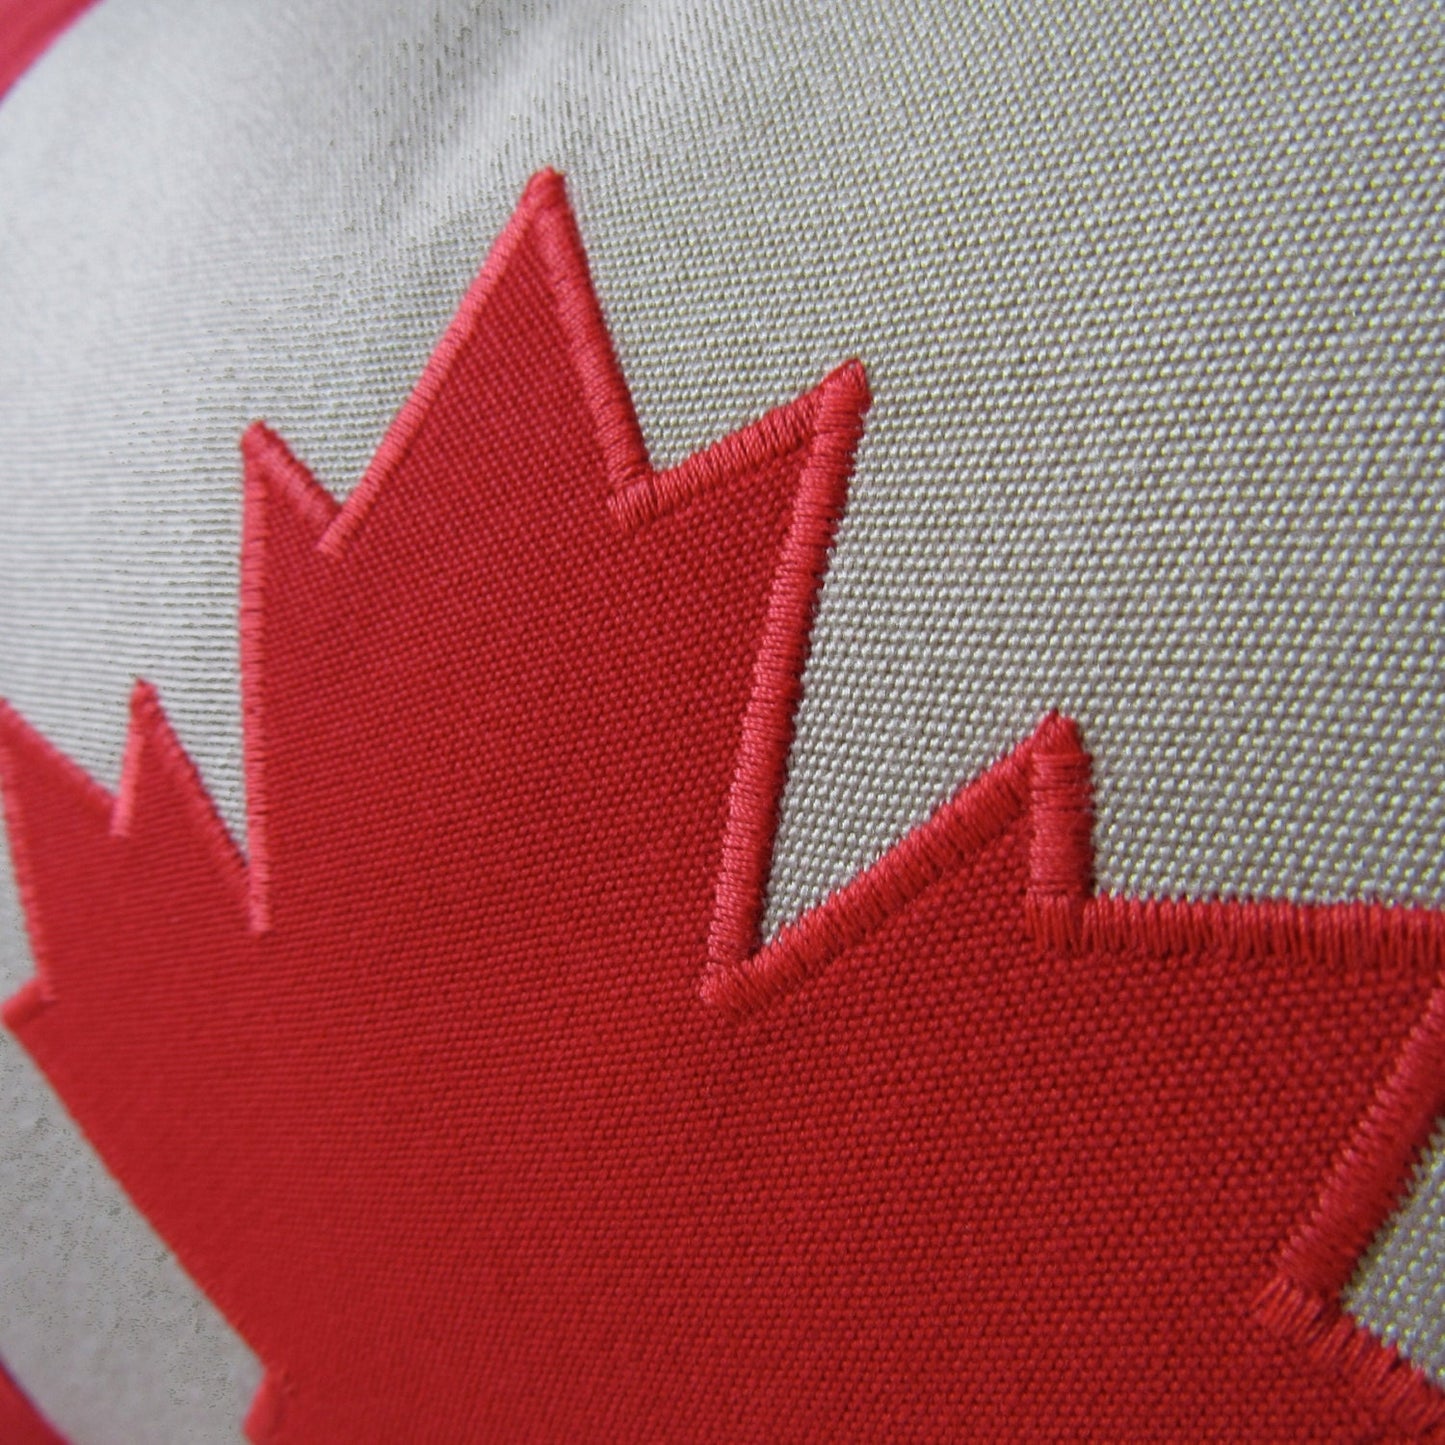 Canada Flag Outdoor Cushion Cover, Maple Leaf, Sunbrella Outdoor Pillow Cover